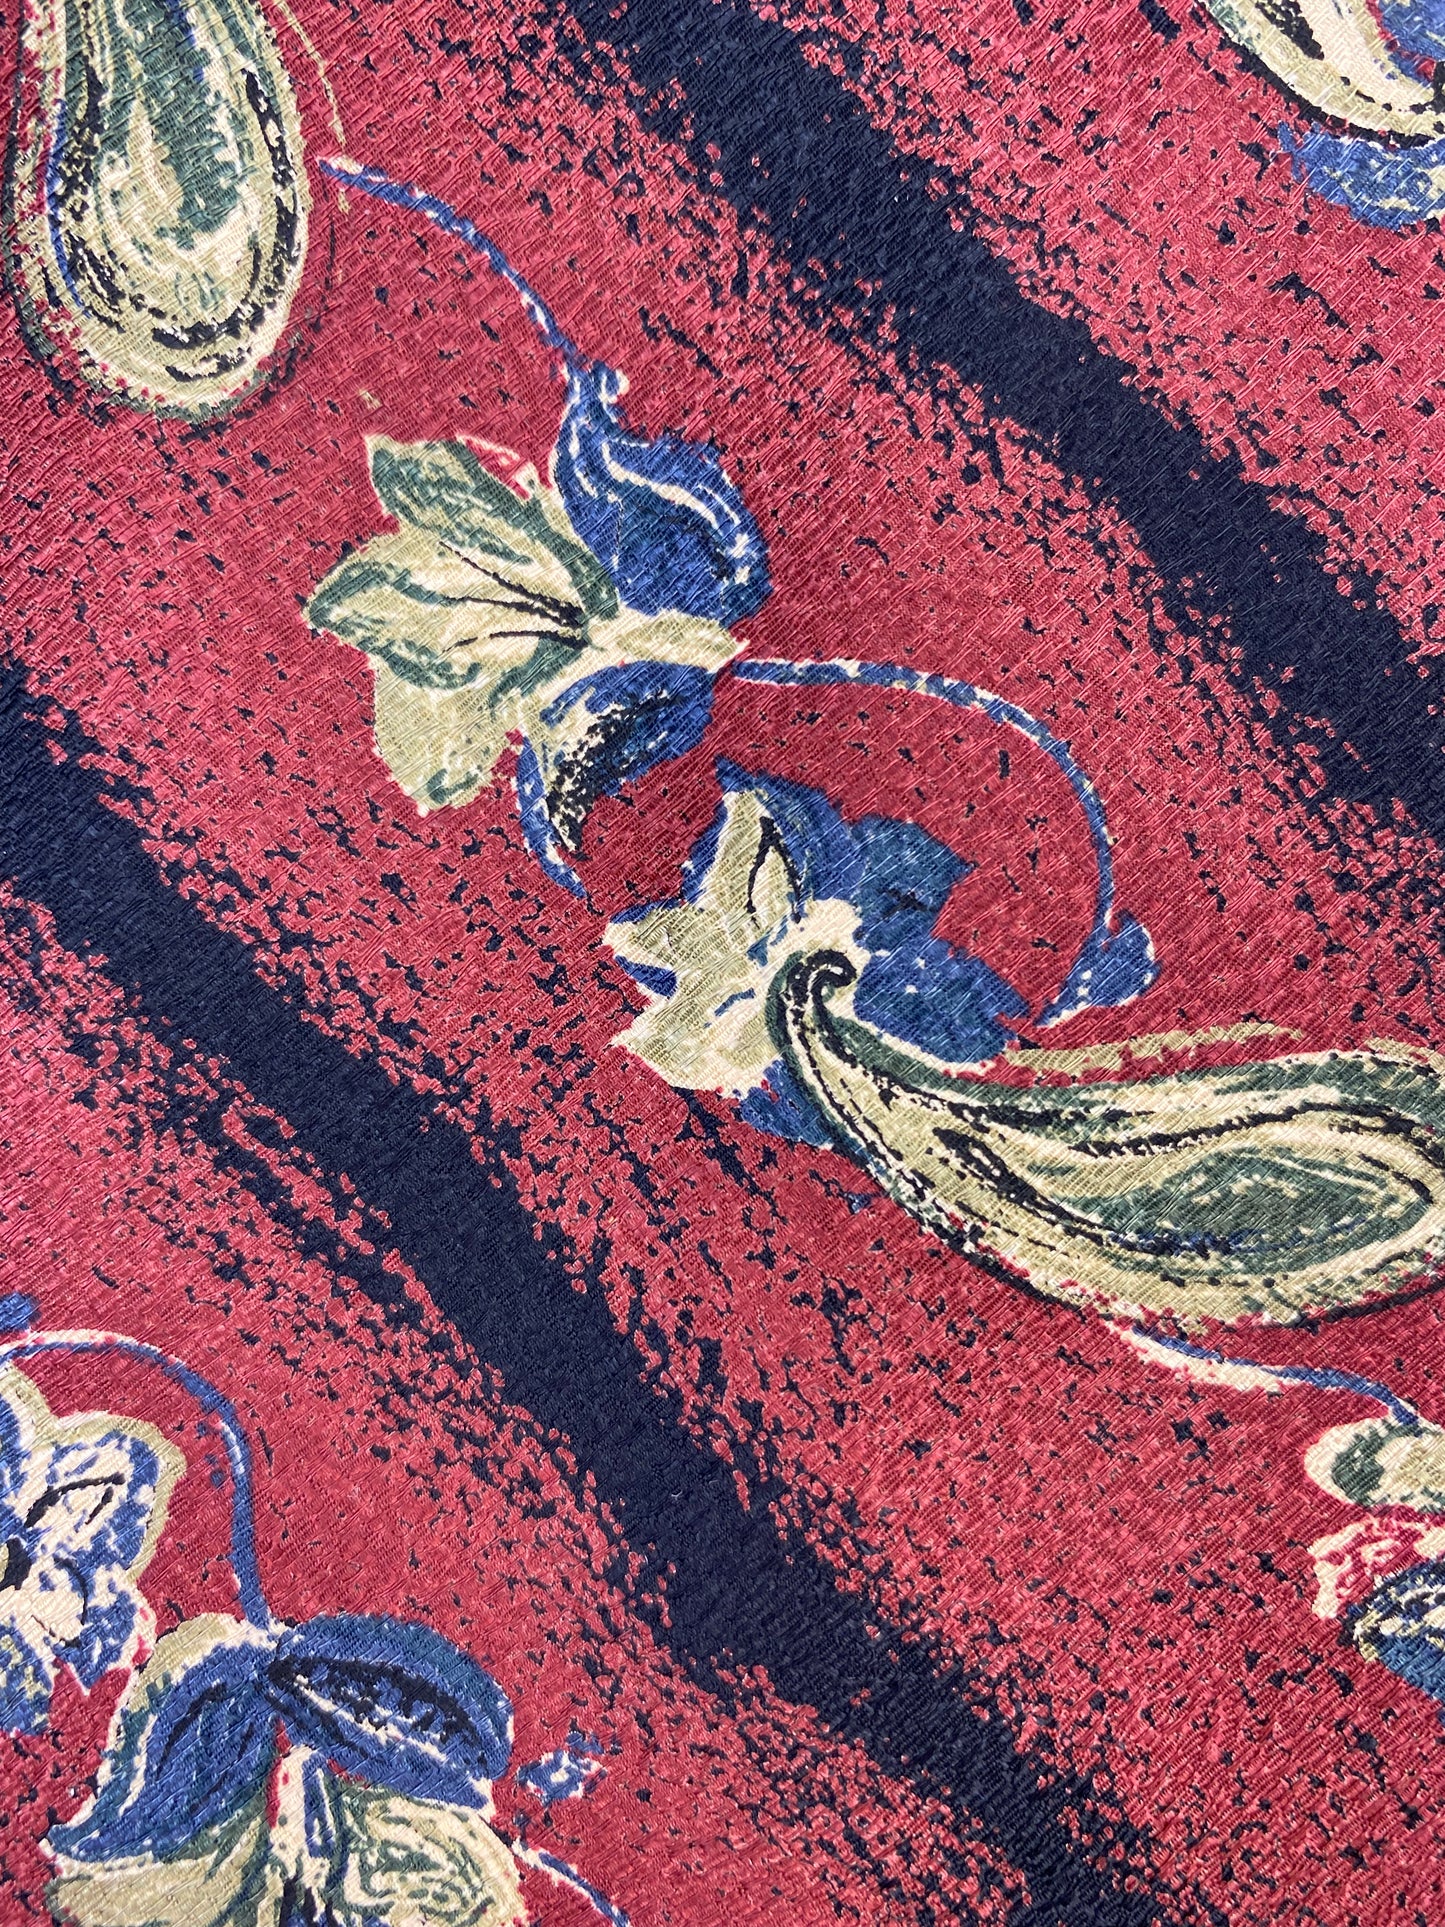 Close-up of: 90s Deadstock Silk Necktie, Men's Vintage Wine Paisley Boteh & Diagonal Stripe Pattern Tie, NOS